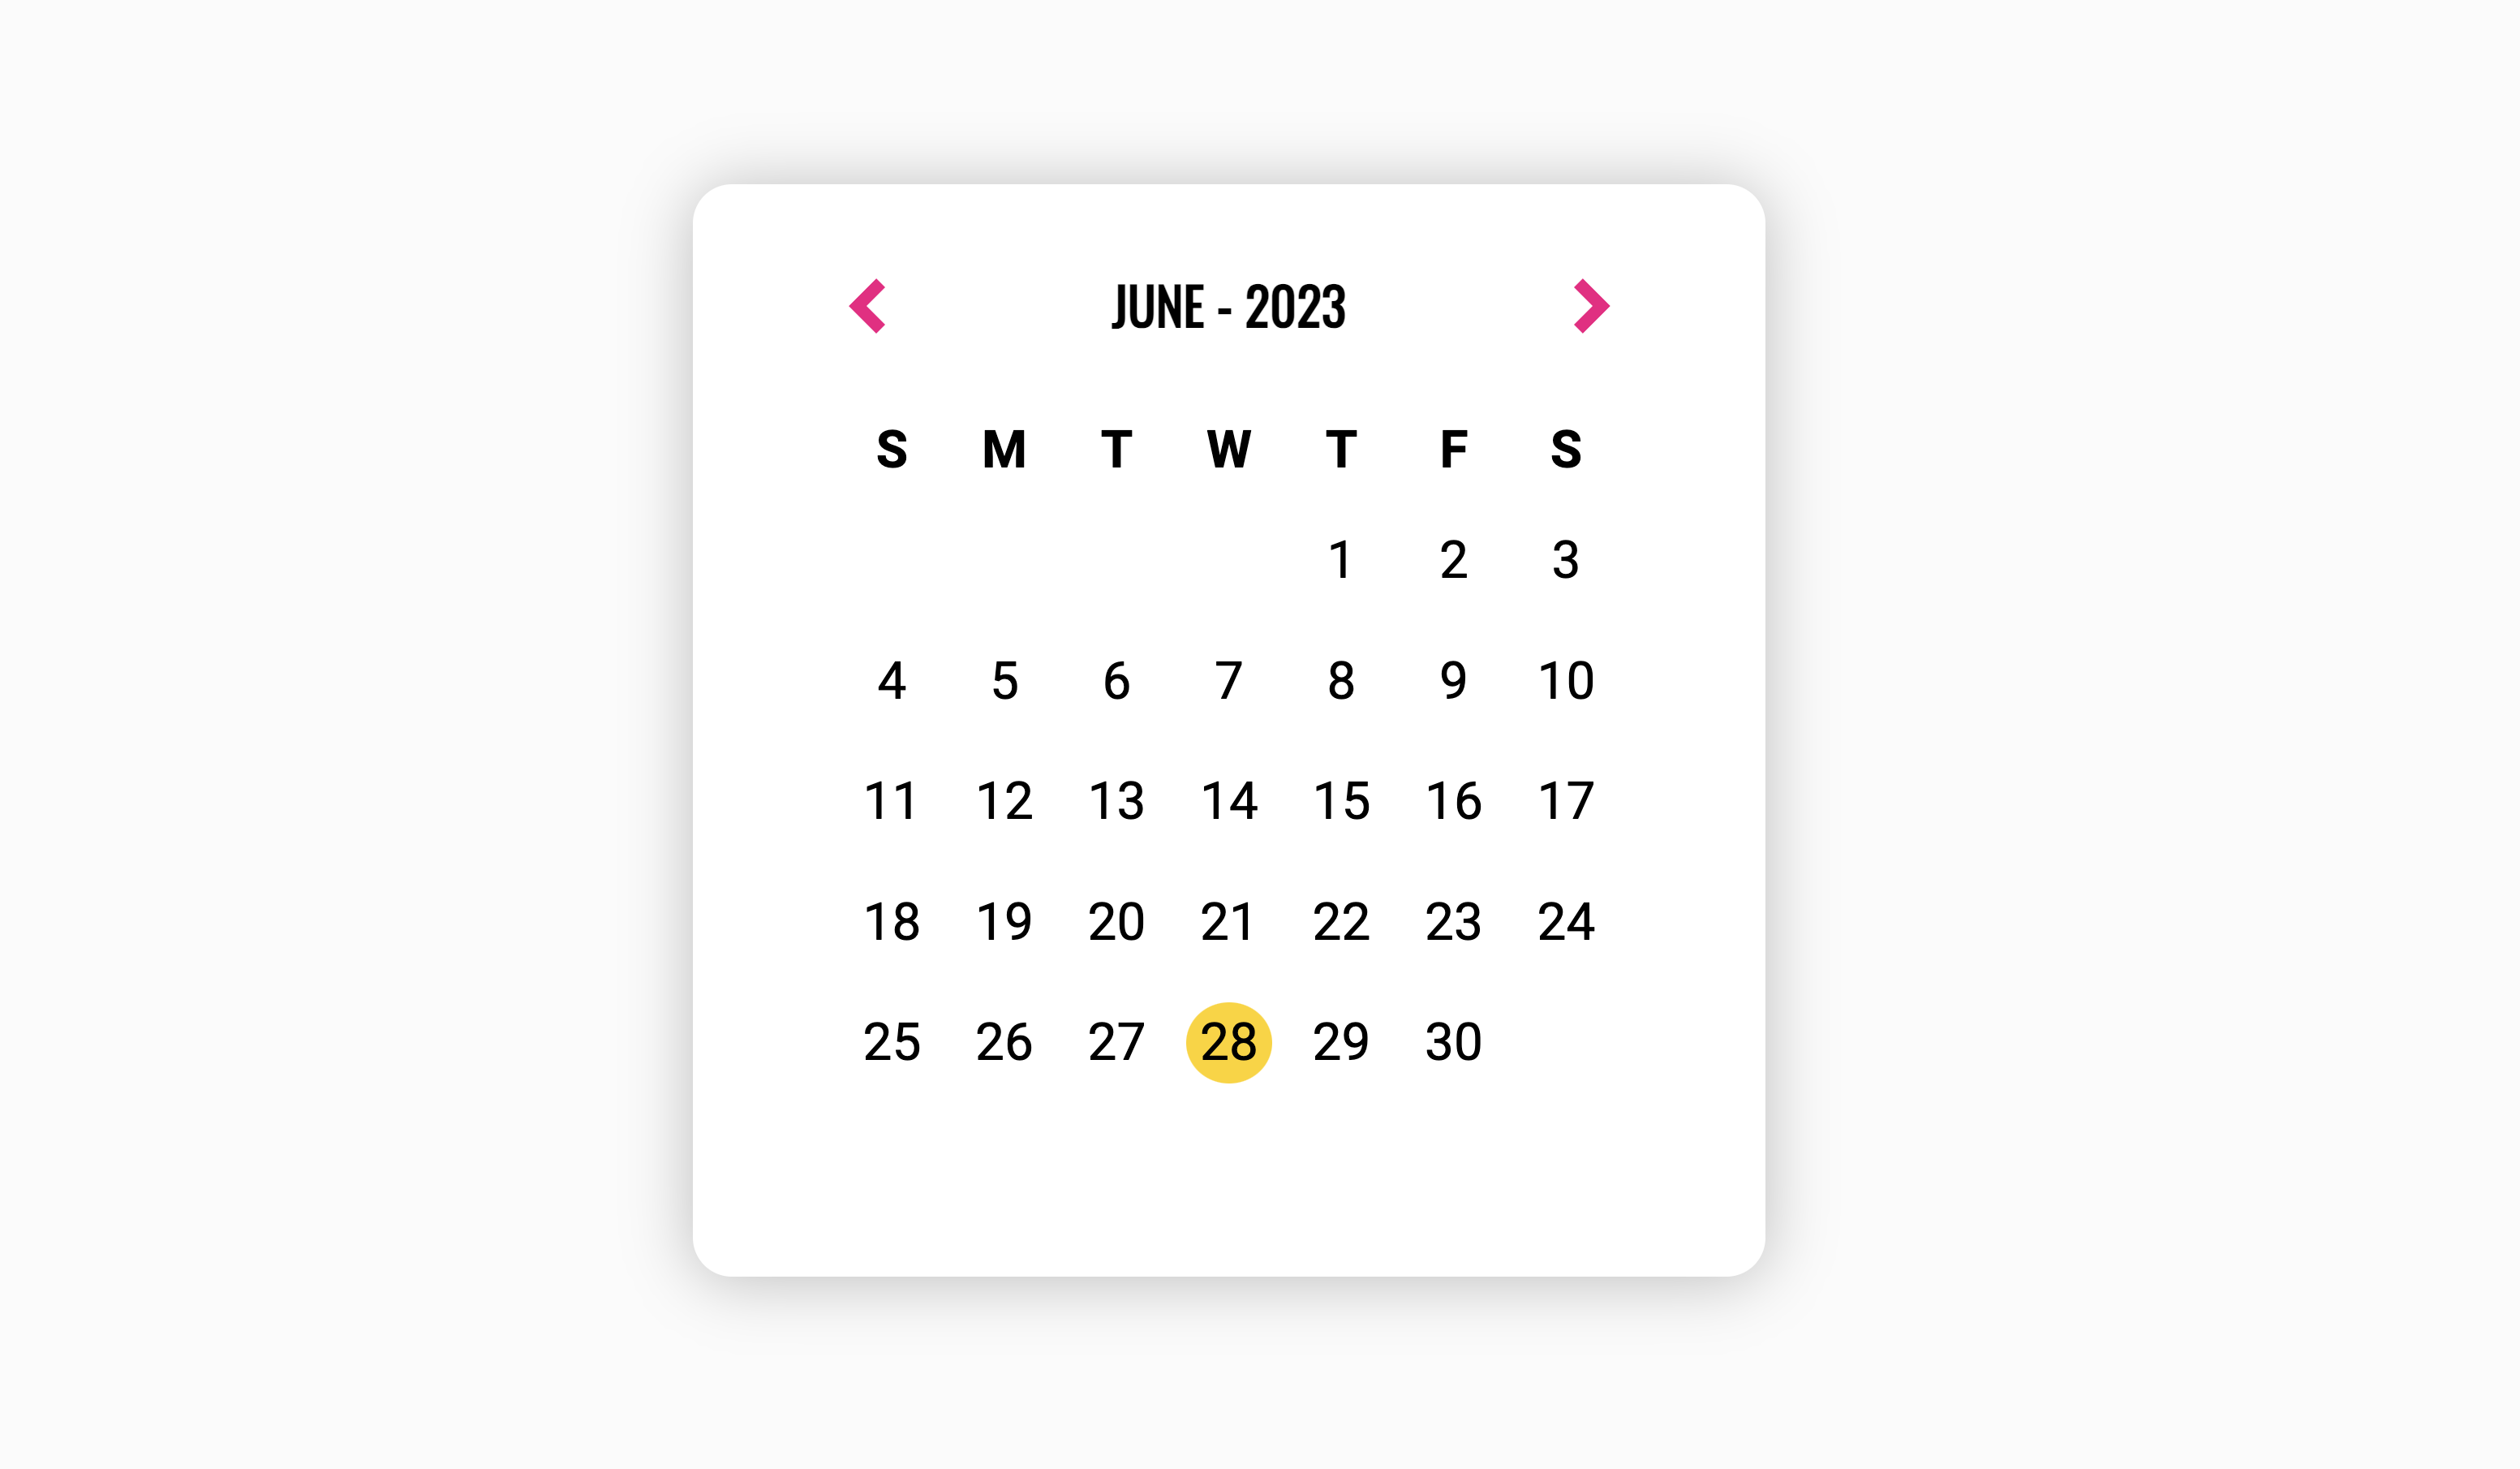 Calendar Component